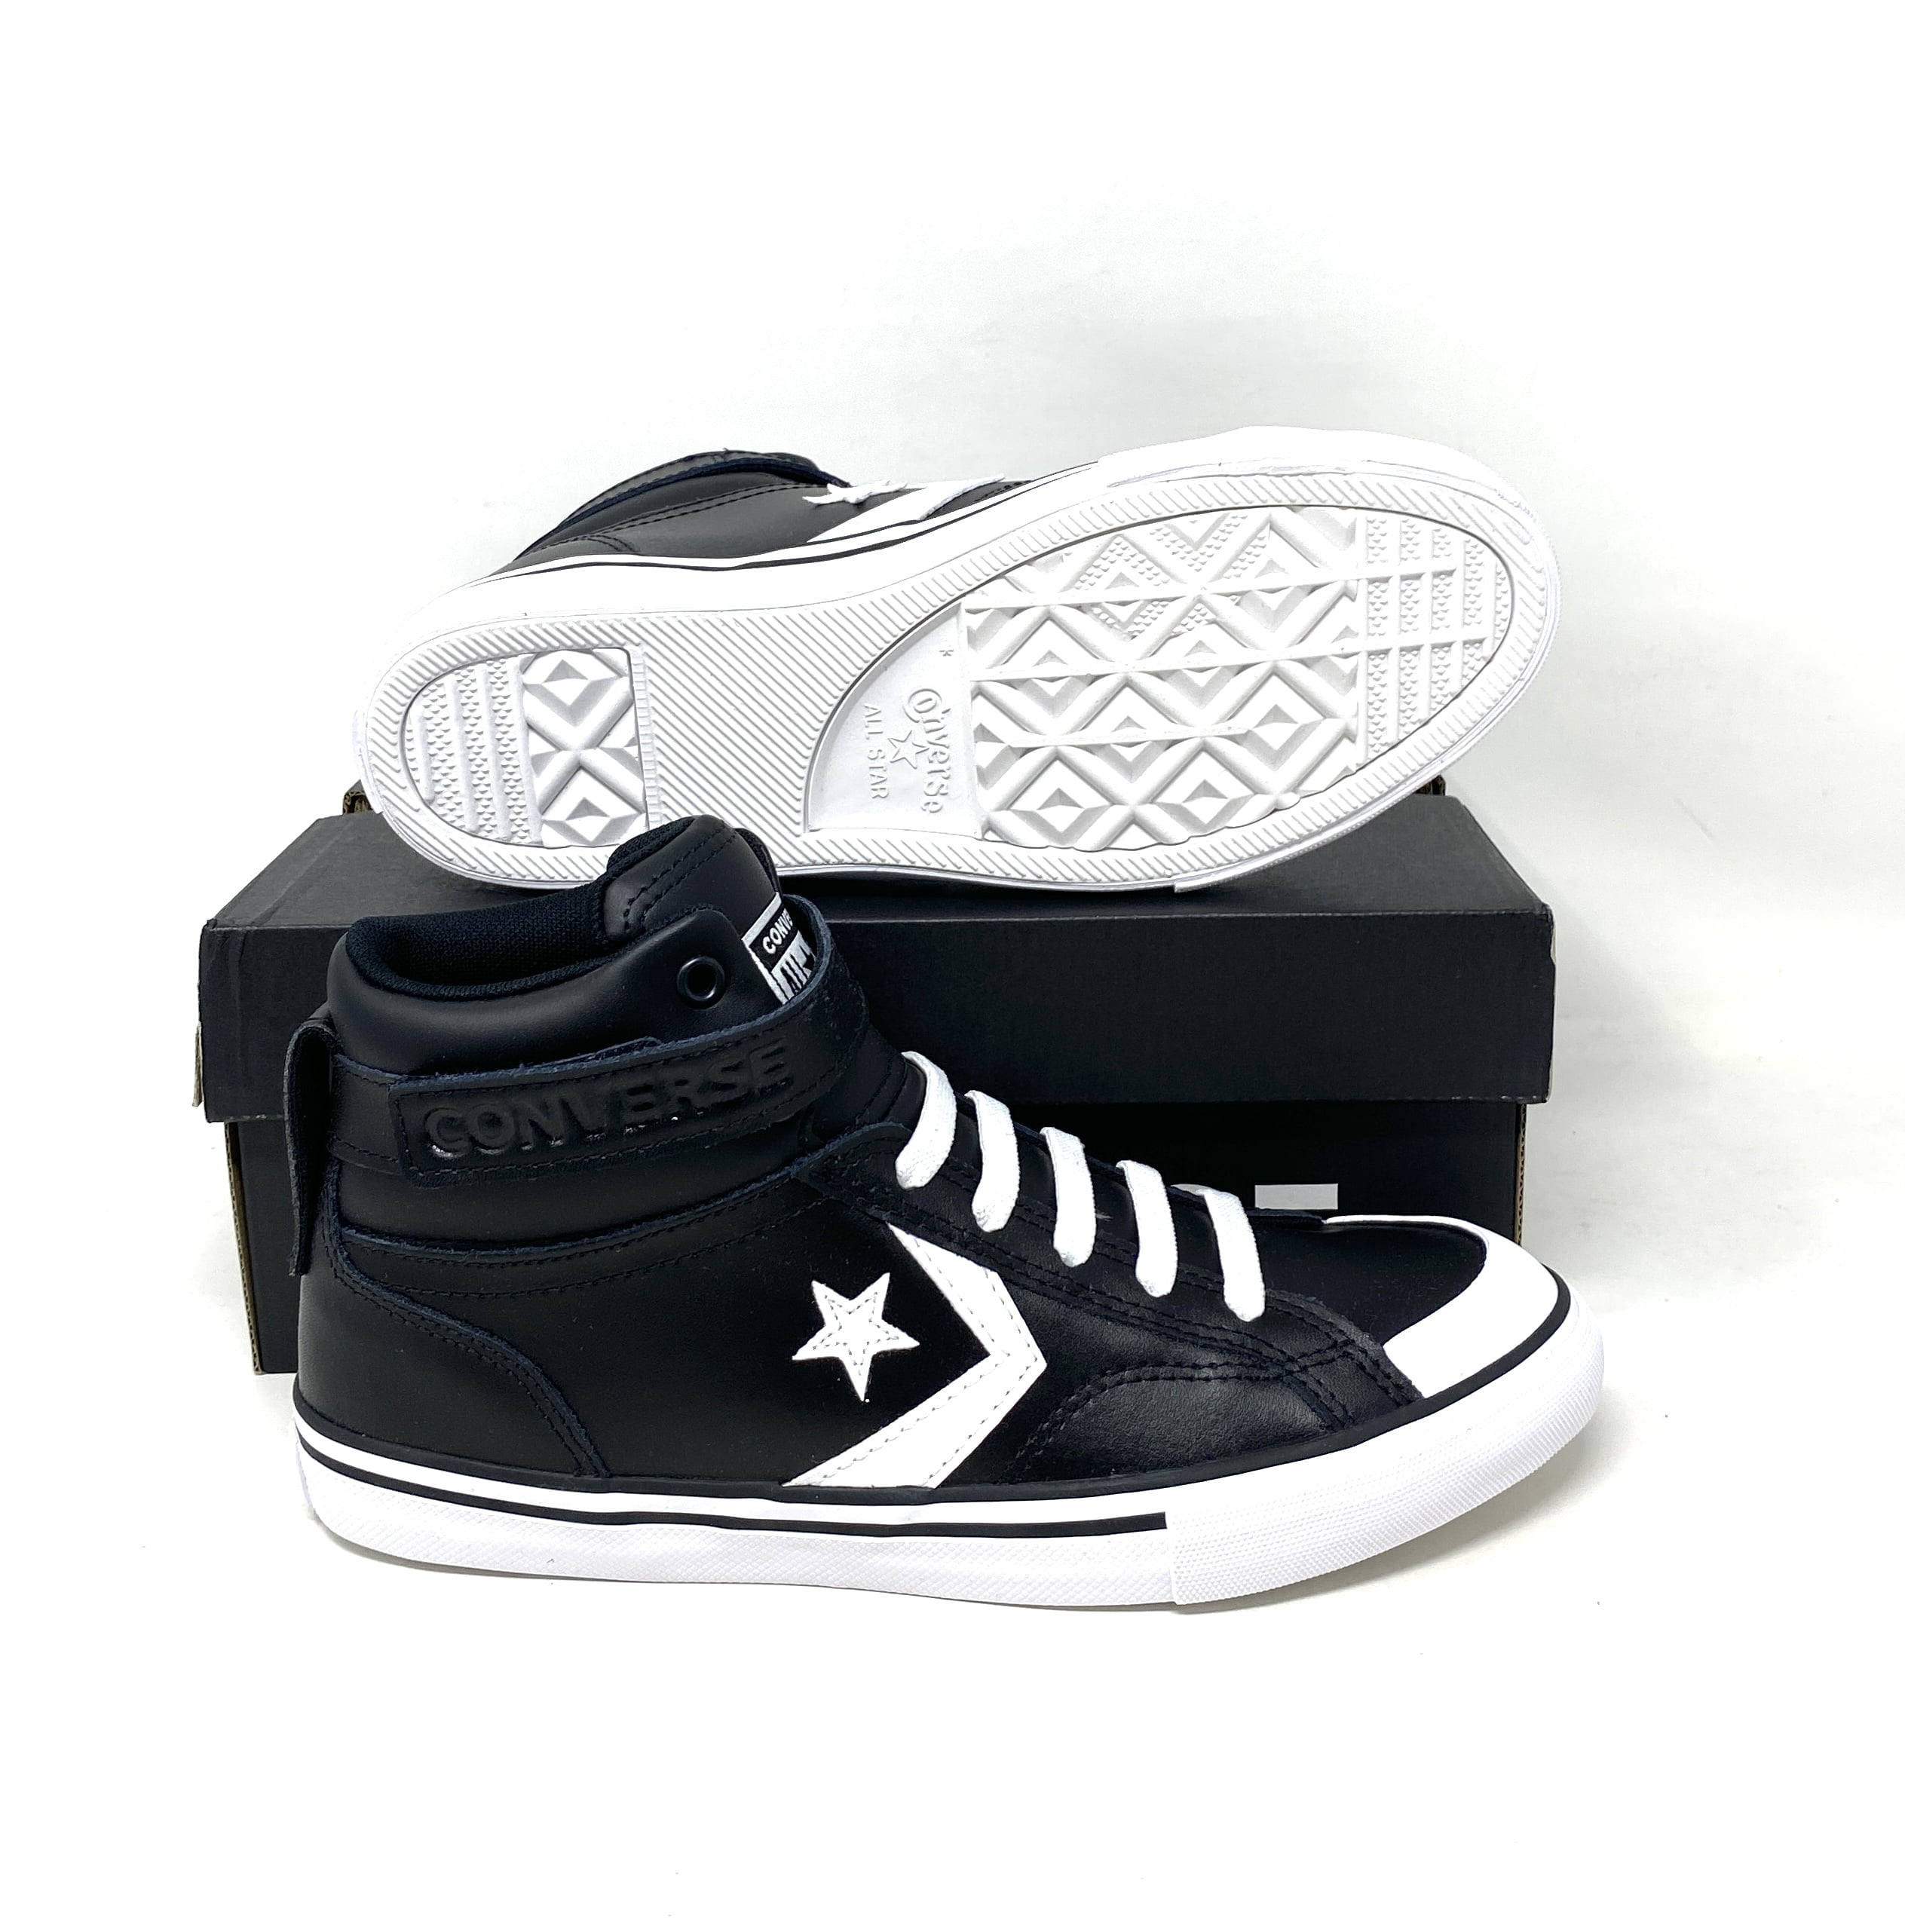 Converse Pro Blaze Strap All Star High Top Black Sneakers 663608C - Walmart.com